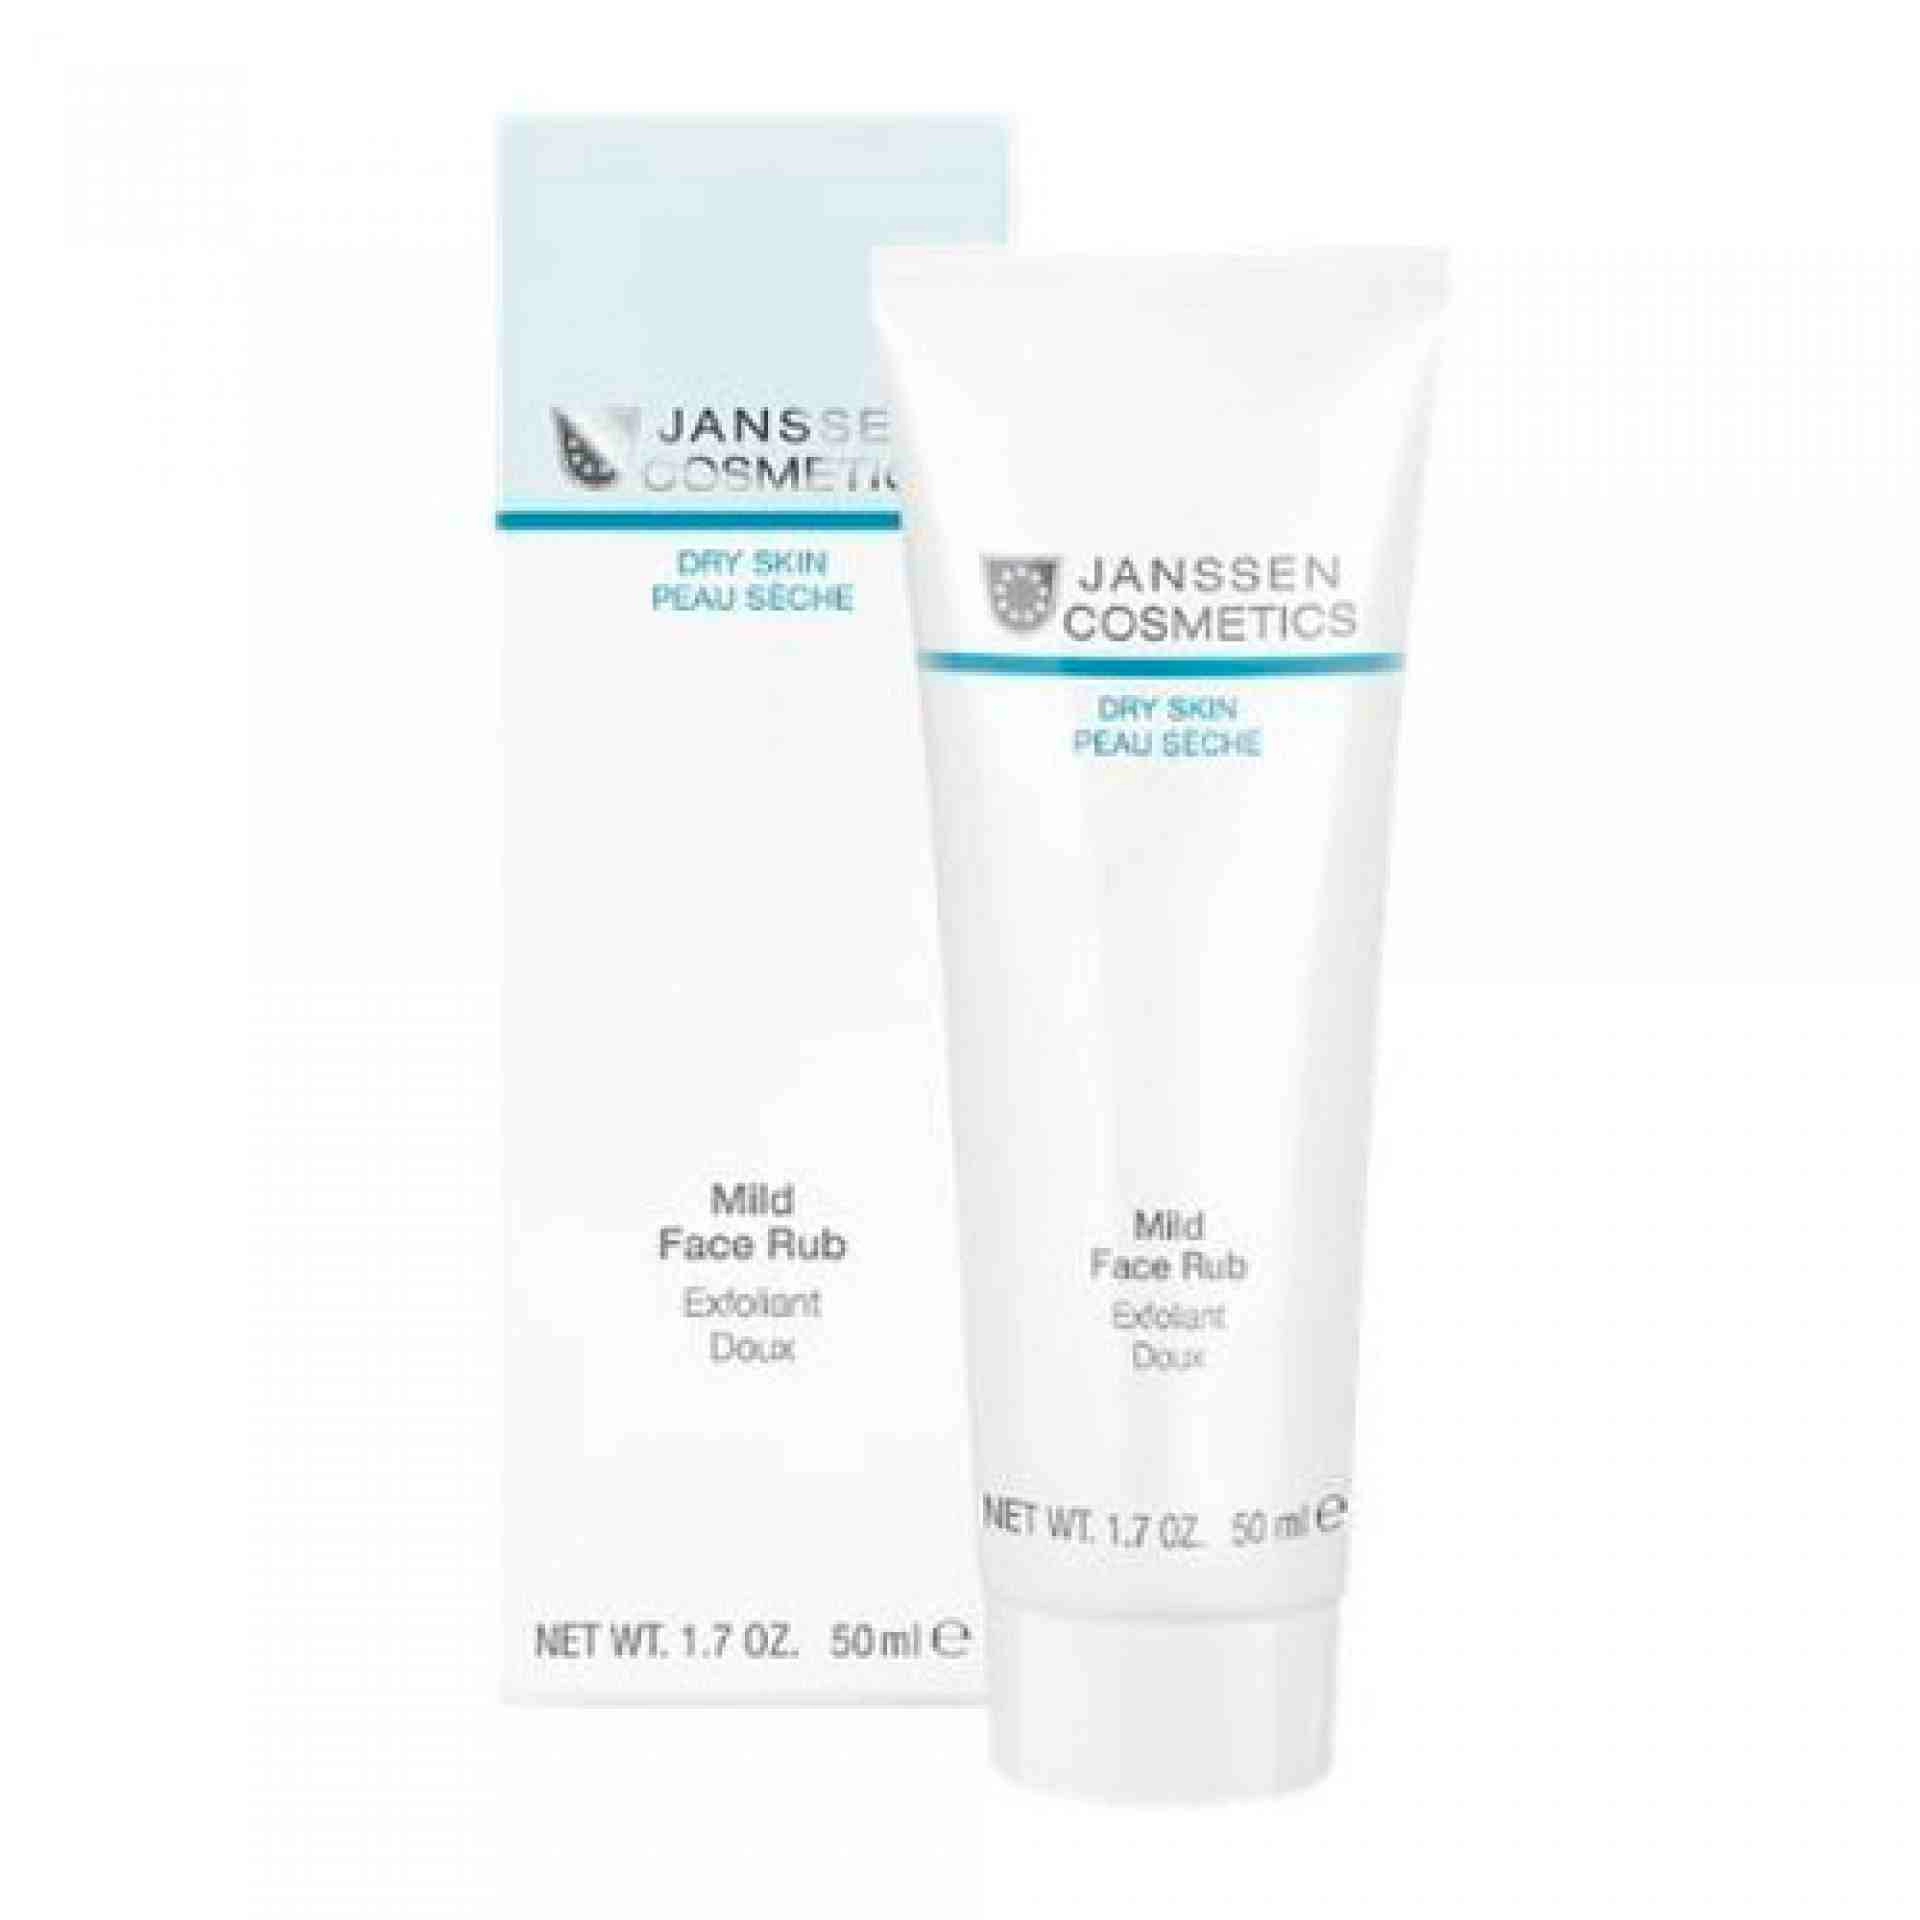 Mild Face Rub - Dry Skin | Exfoliante 50ml - Janssen Cosmetics ®